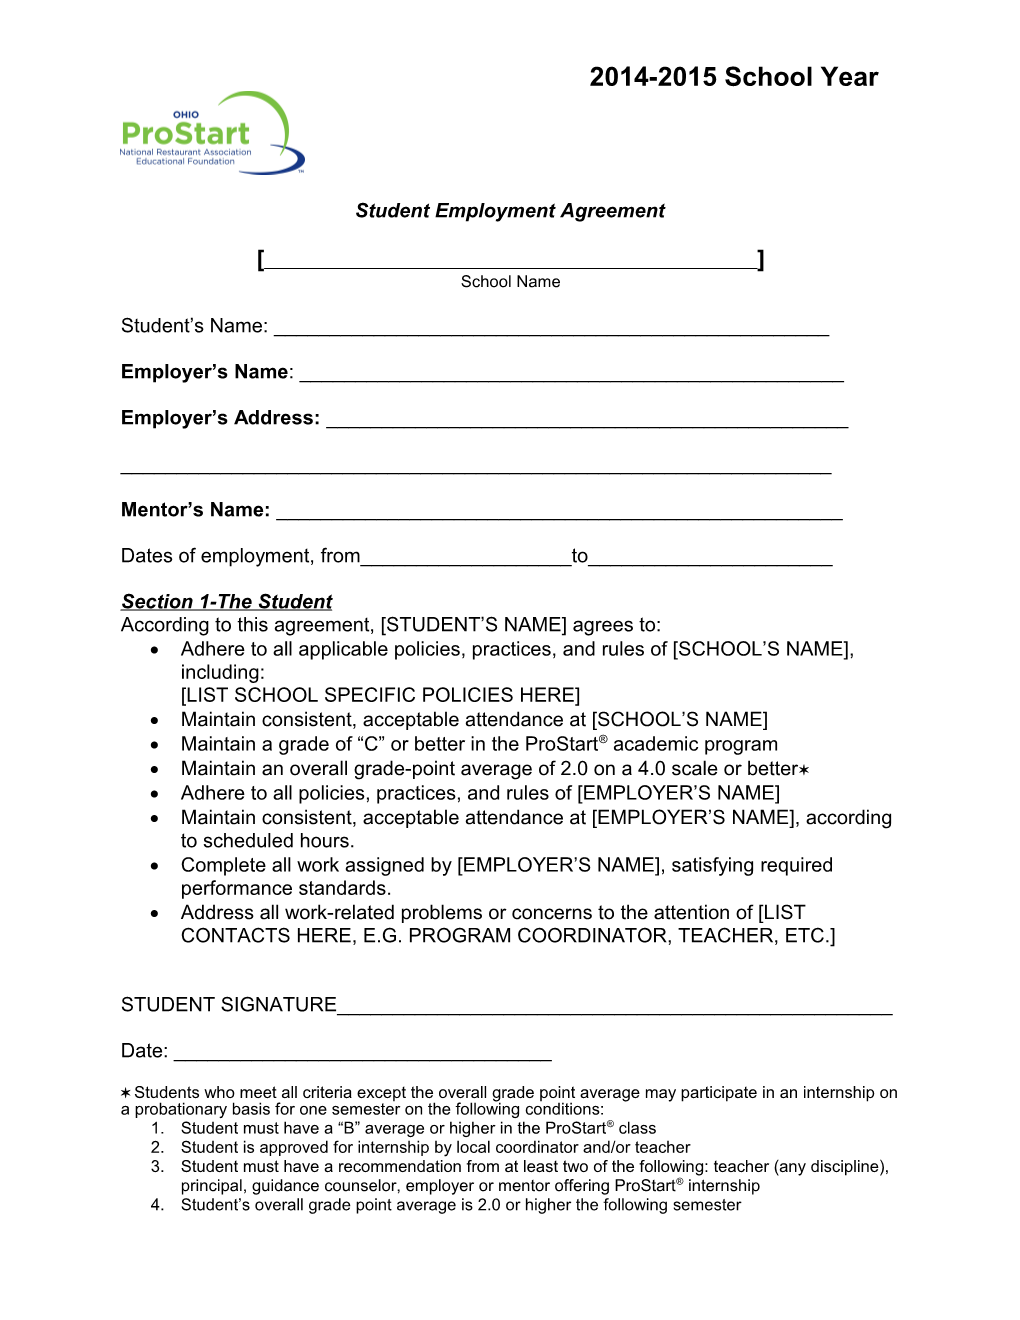 Student Employment Agreement